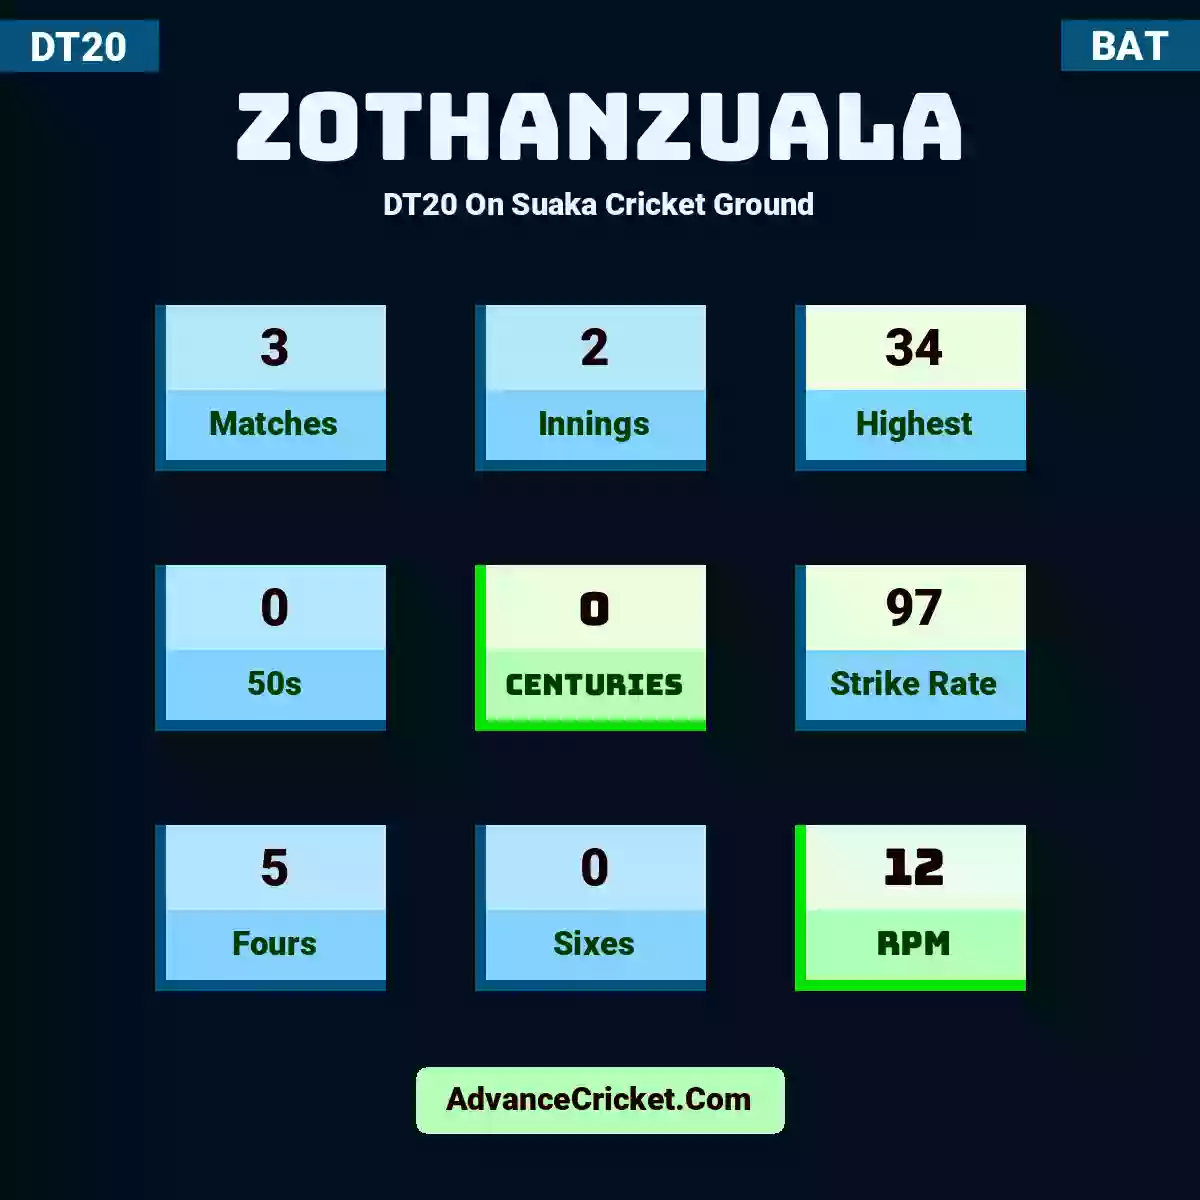 Zothanzuala DT20  On Suaka Cricket Ground, Zothanzuala played 3 matches, scored 34 runs as highest, 0 half-centuries, and 0 centuries, with a strike rate of 97. Zothanzuala hit 5 fours and 0 sixes, with an RPM of 12.